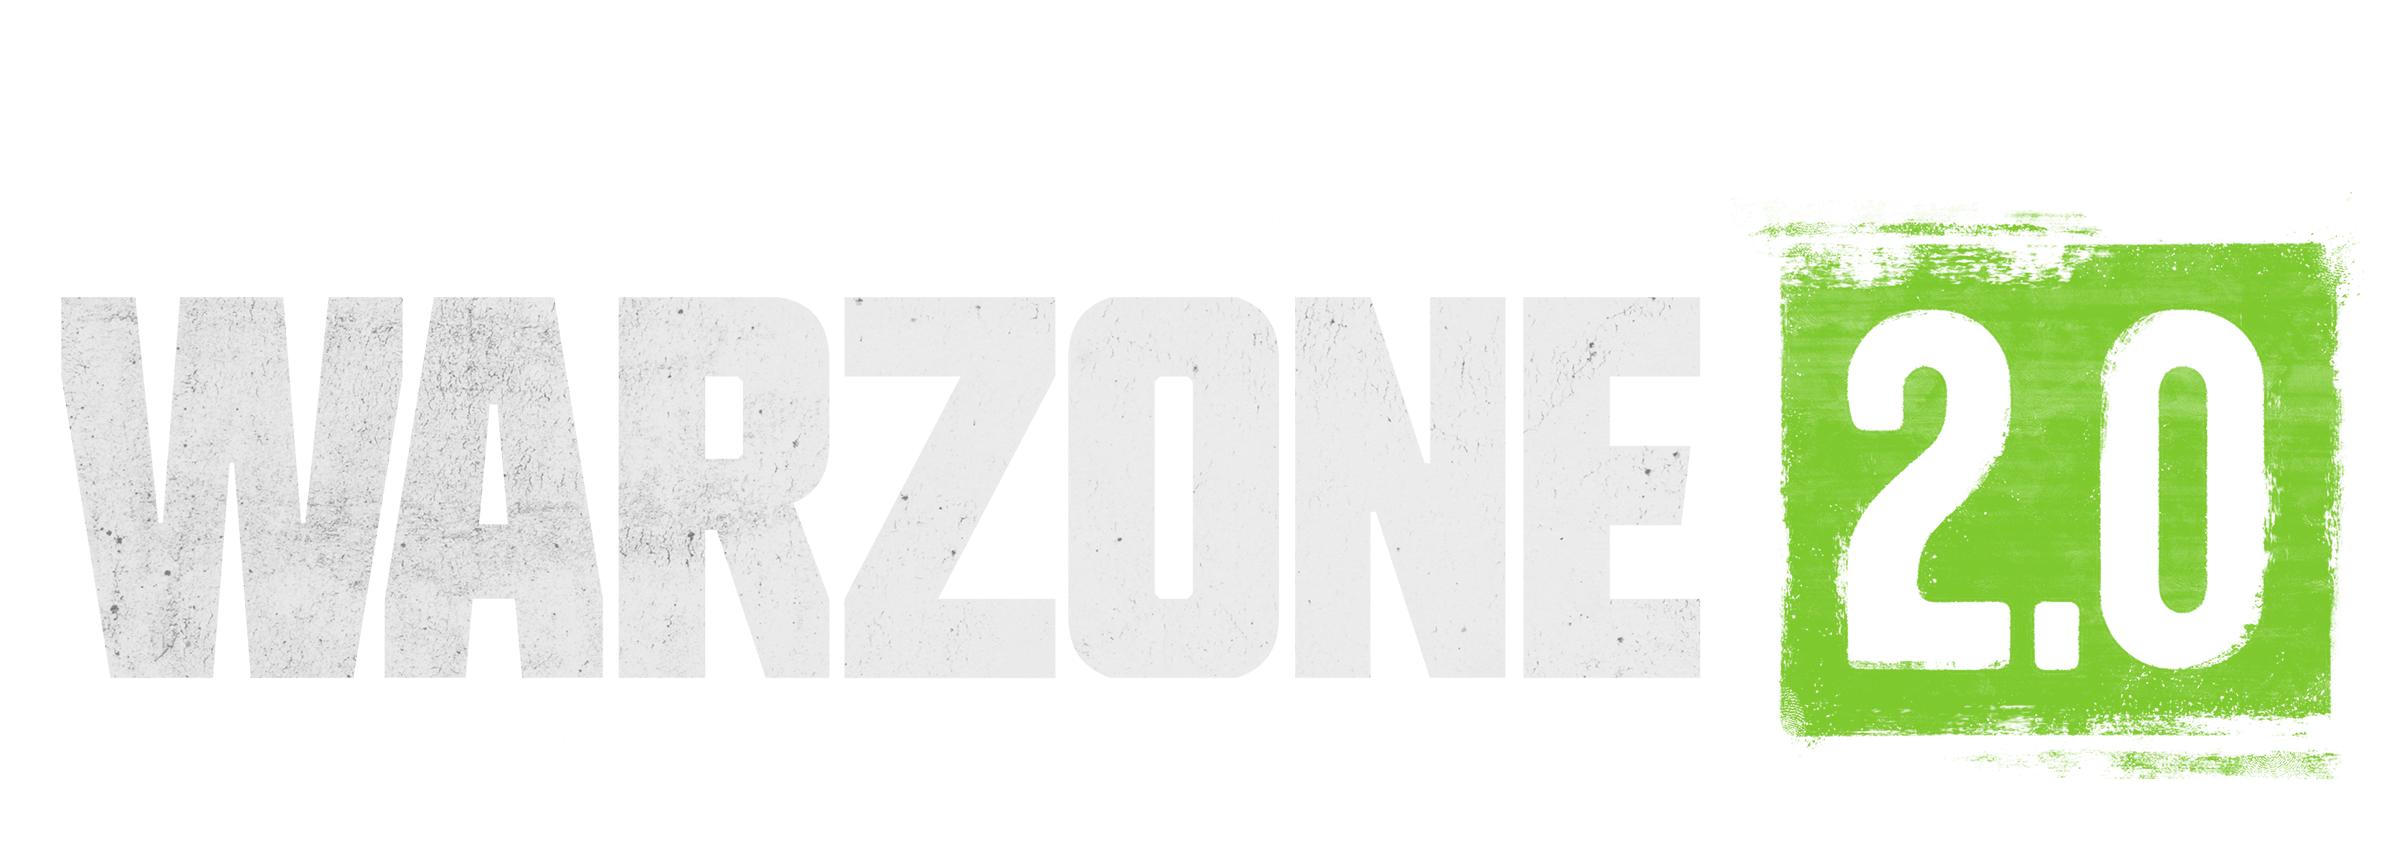 Call of Duty Warzone 2 Logo